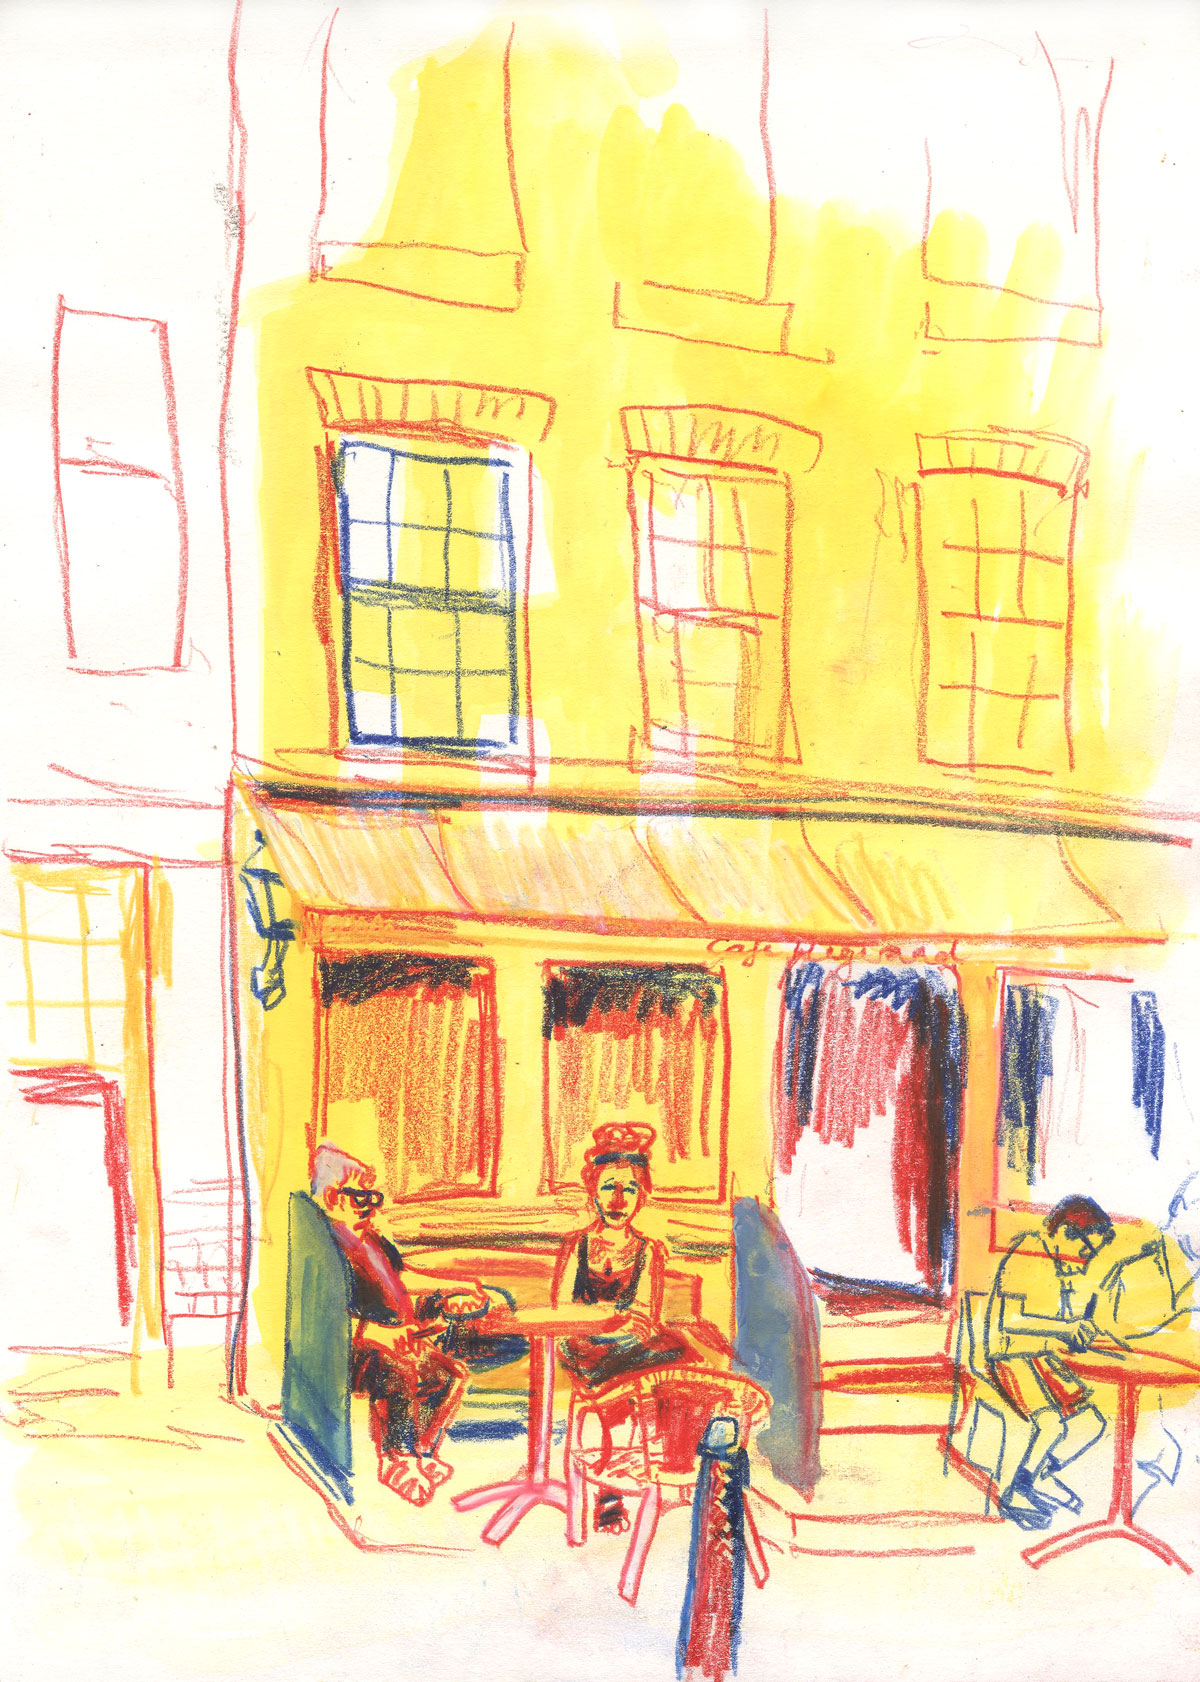 Illustration at Urban Sketchers Cafe Hegeraad Amsterdam by Ellen Vesters picture book illustrator